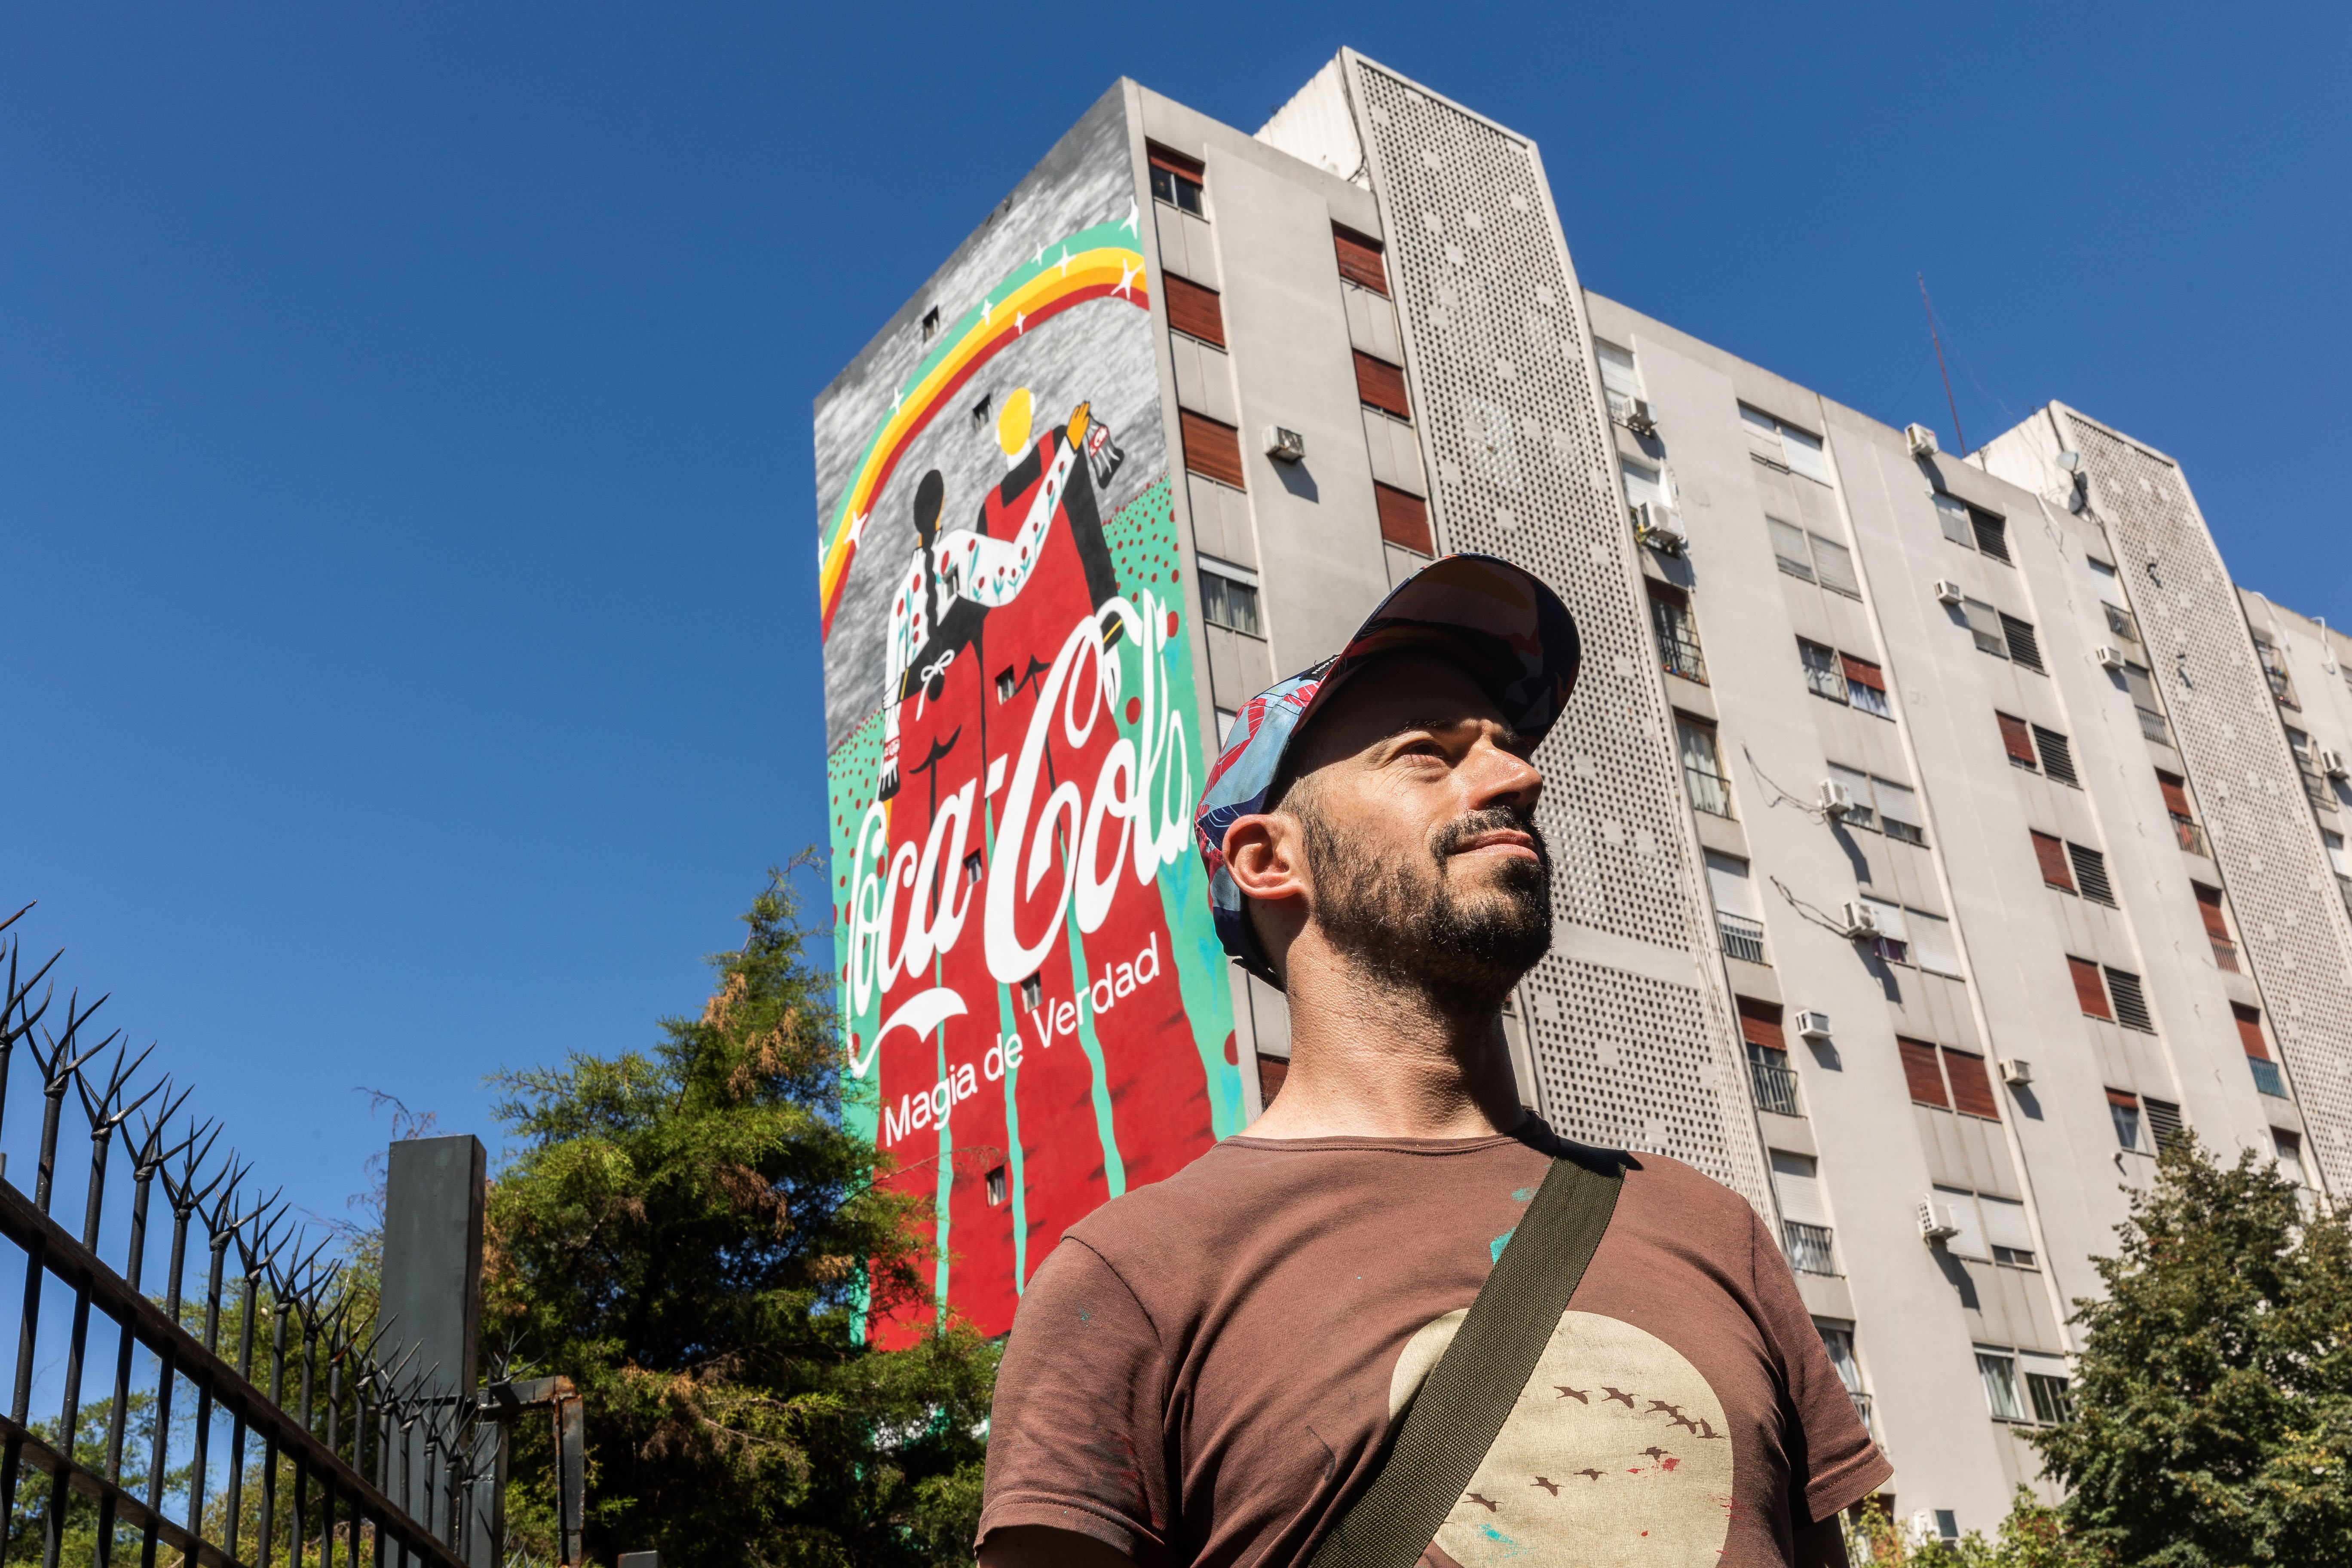 Hombre con edificio con mural de Coca-Cola de fondo